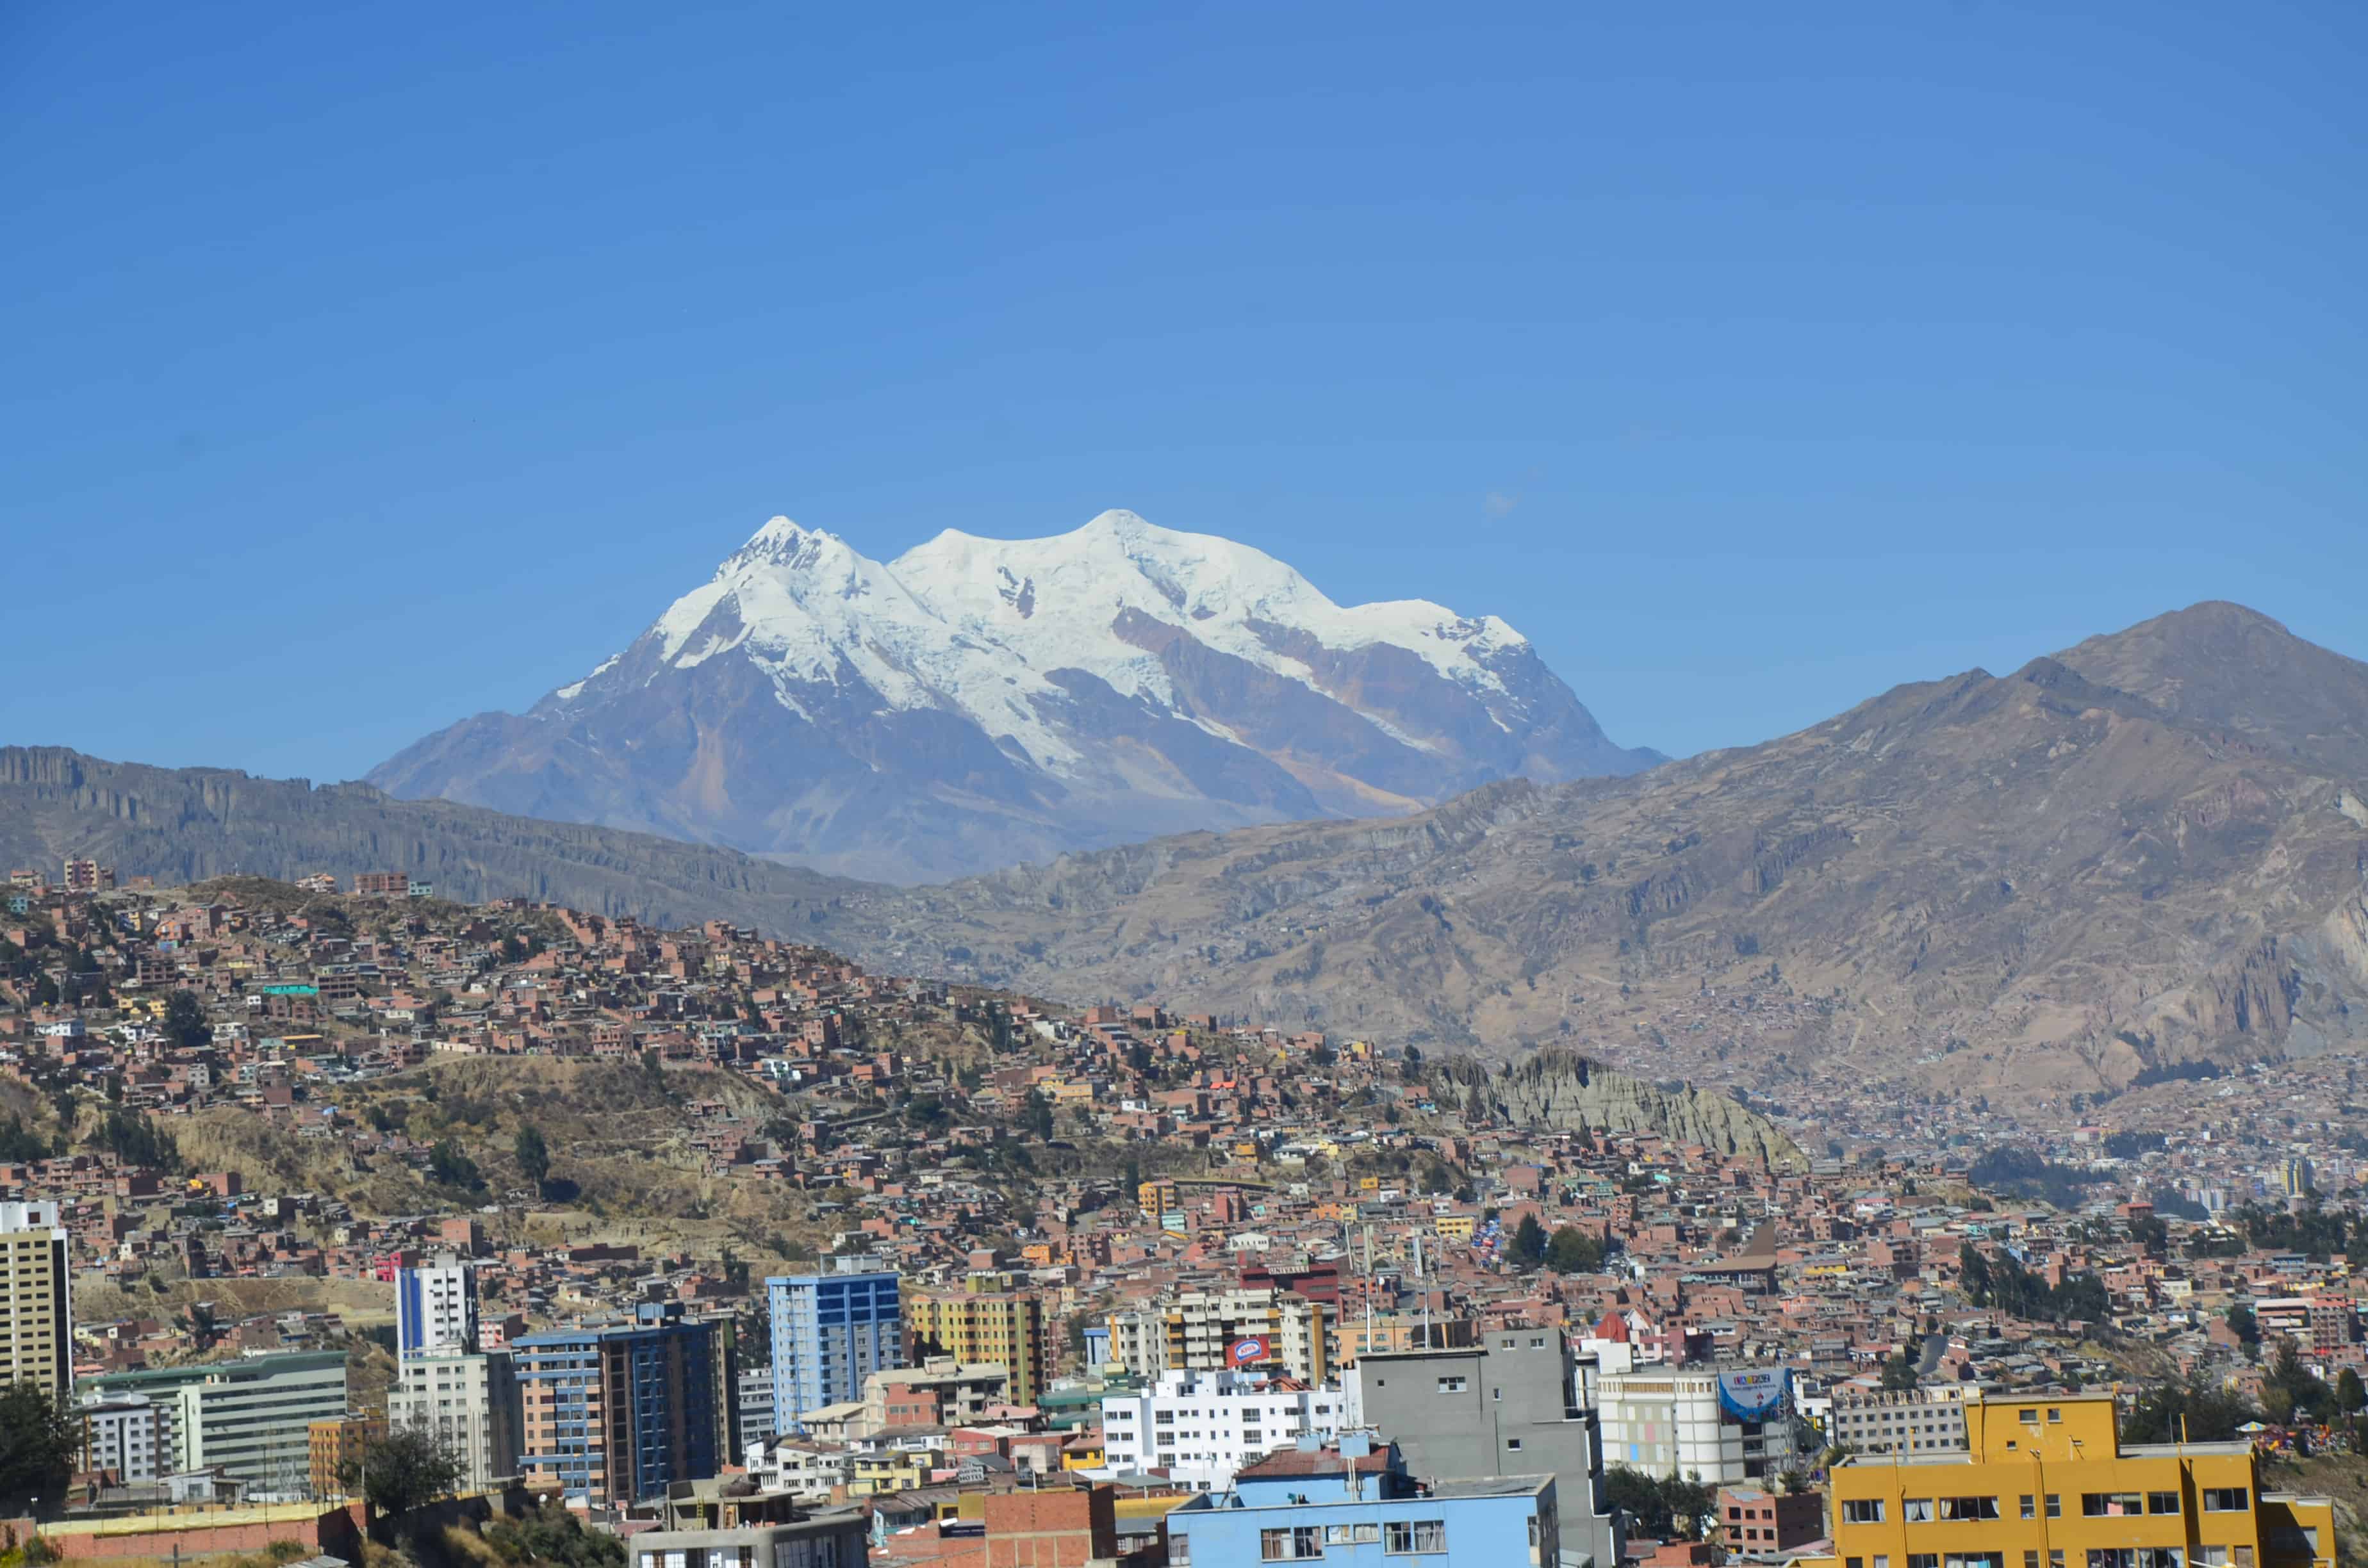 View of Illimani from Hotel Presidente in La Paz, Bolivia